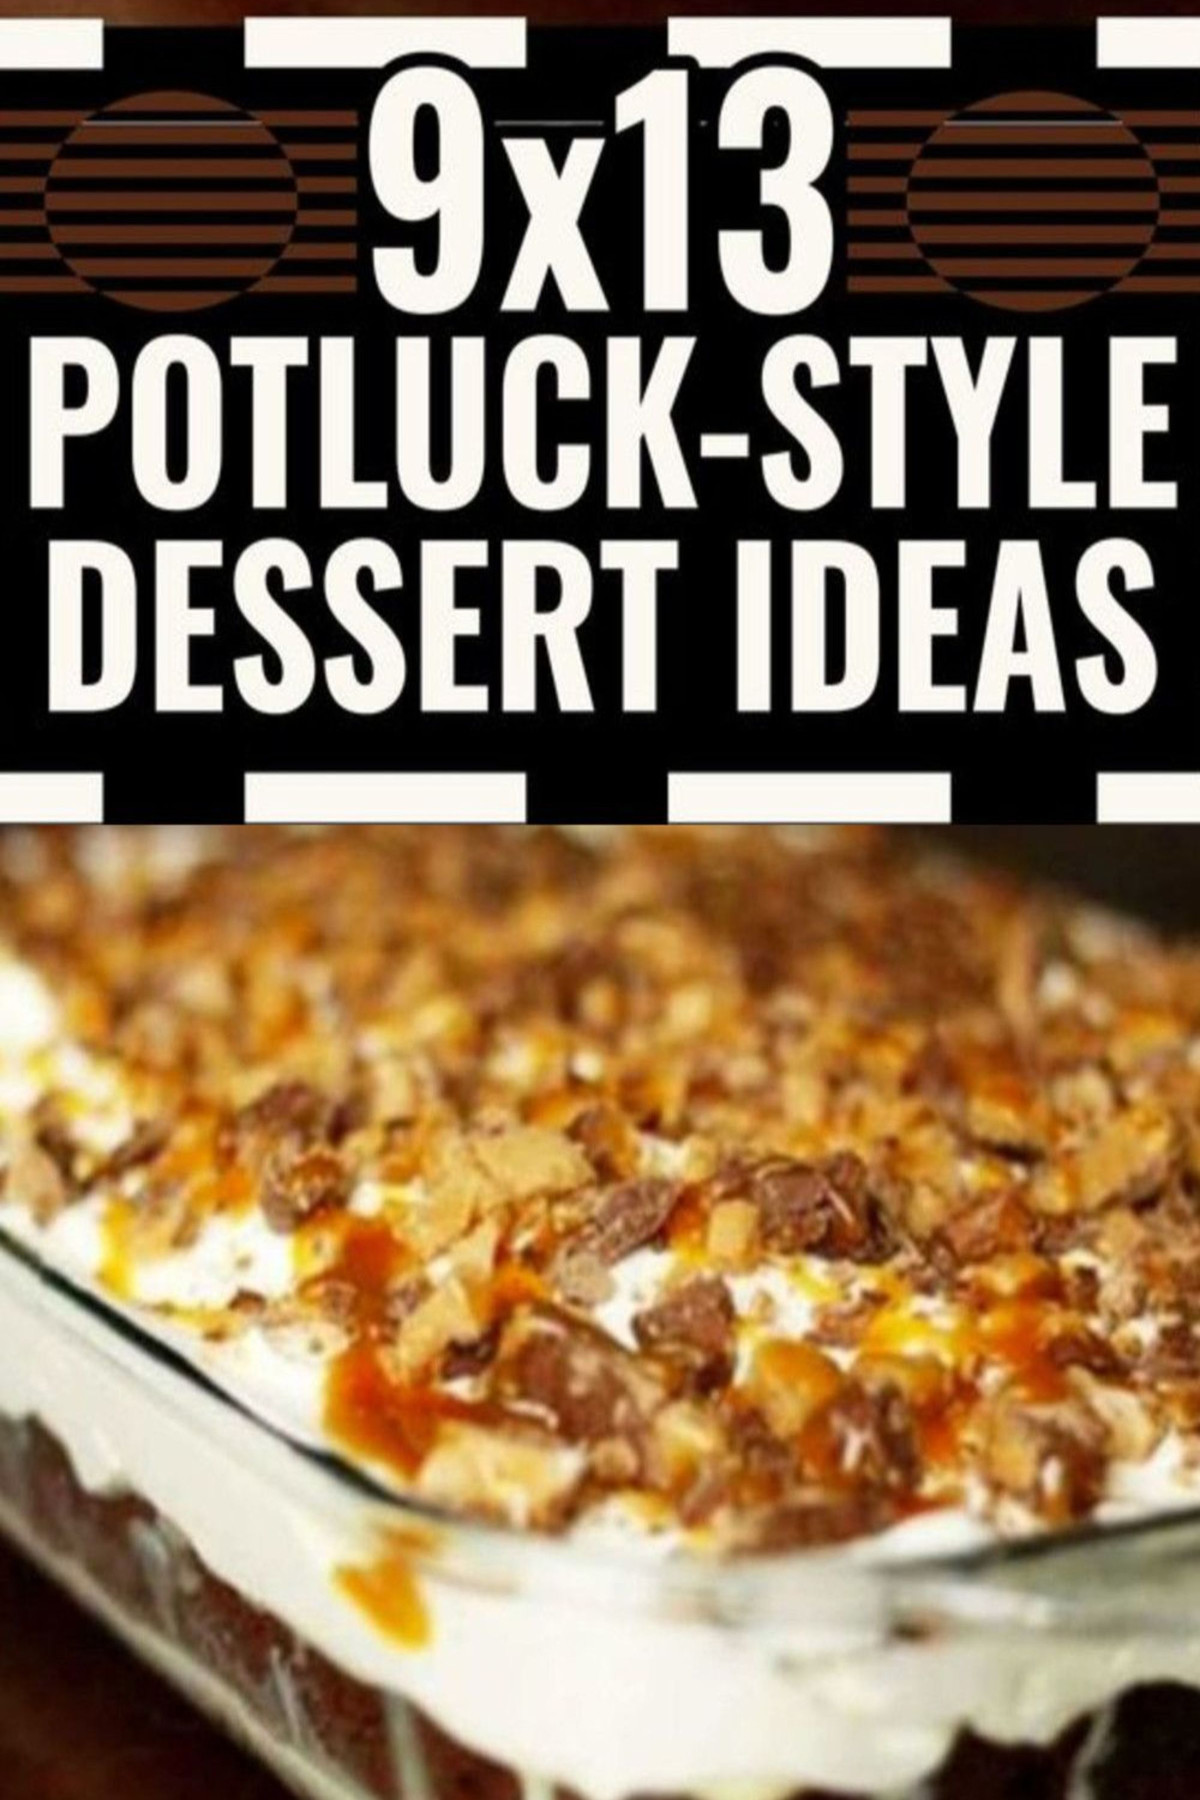 9x13 potluck style desserts